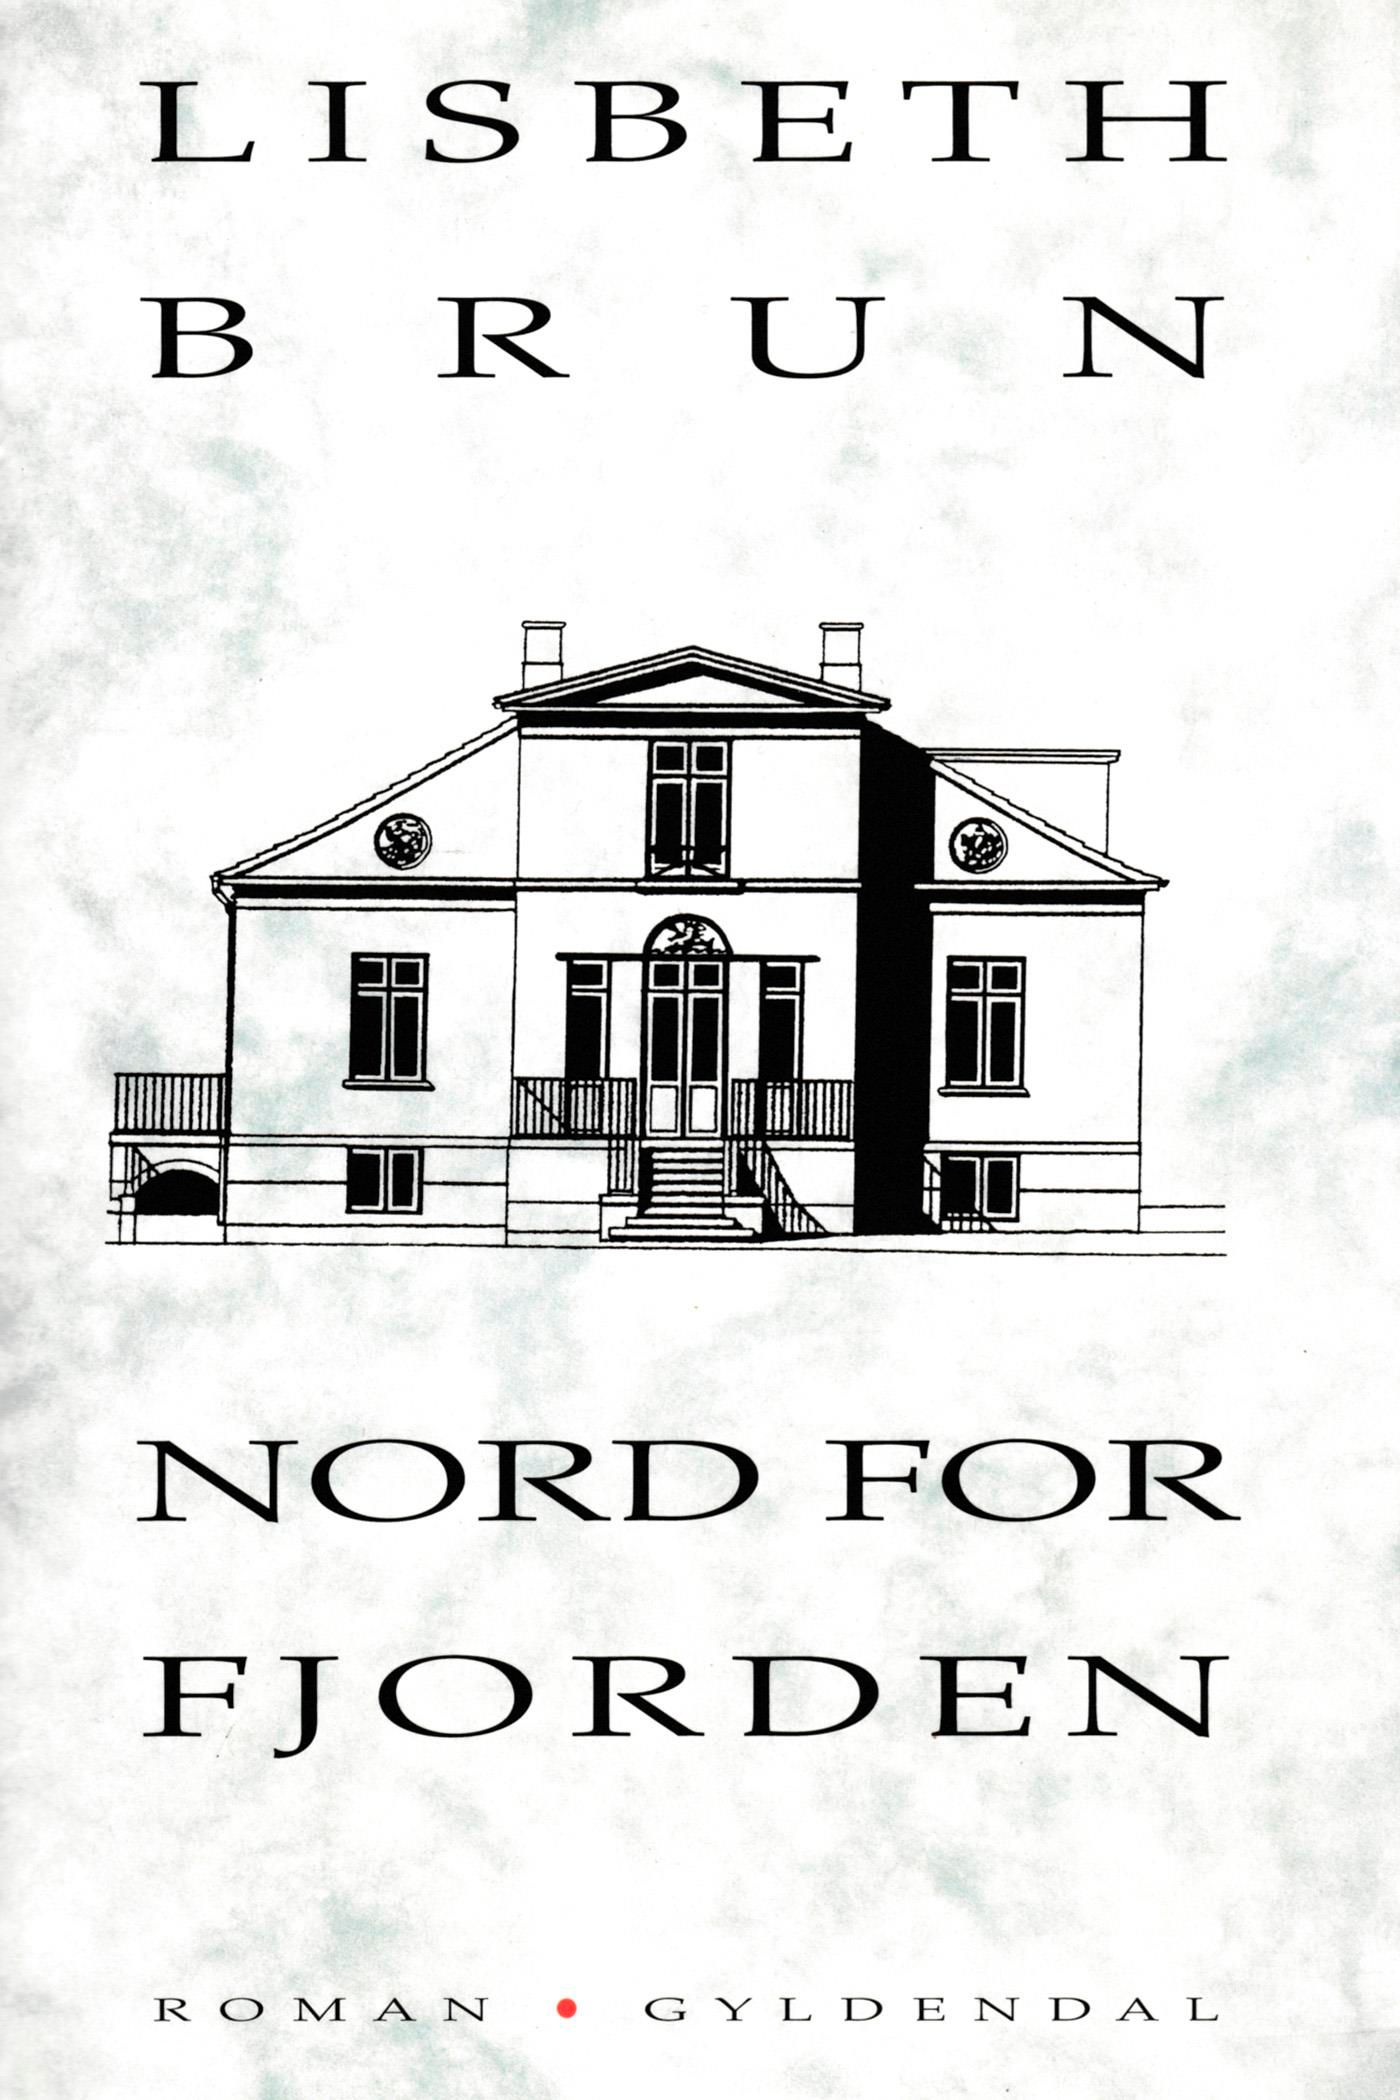 Nord for fjorden, eBook by Lisbeth Brun